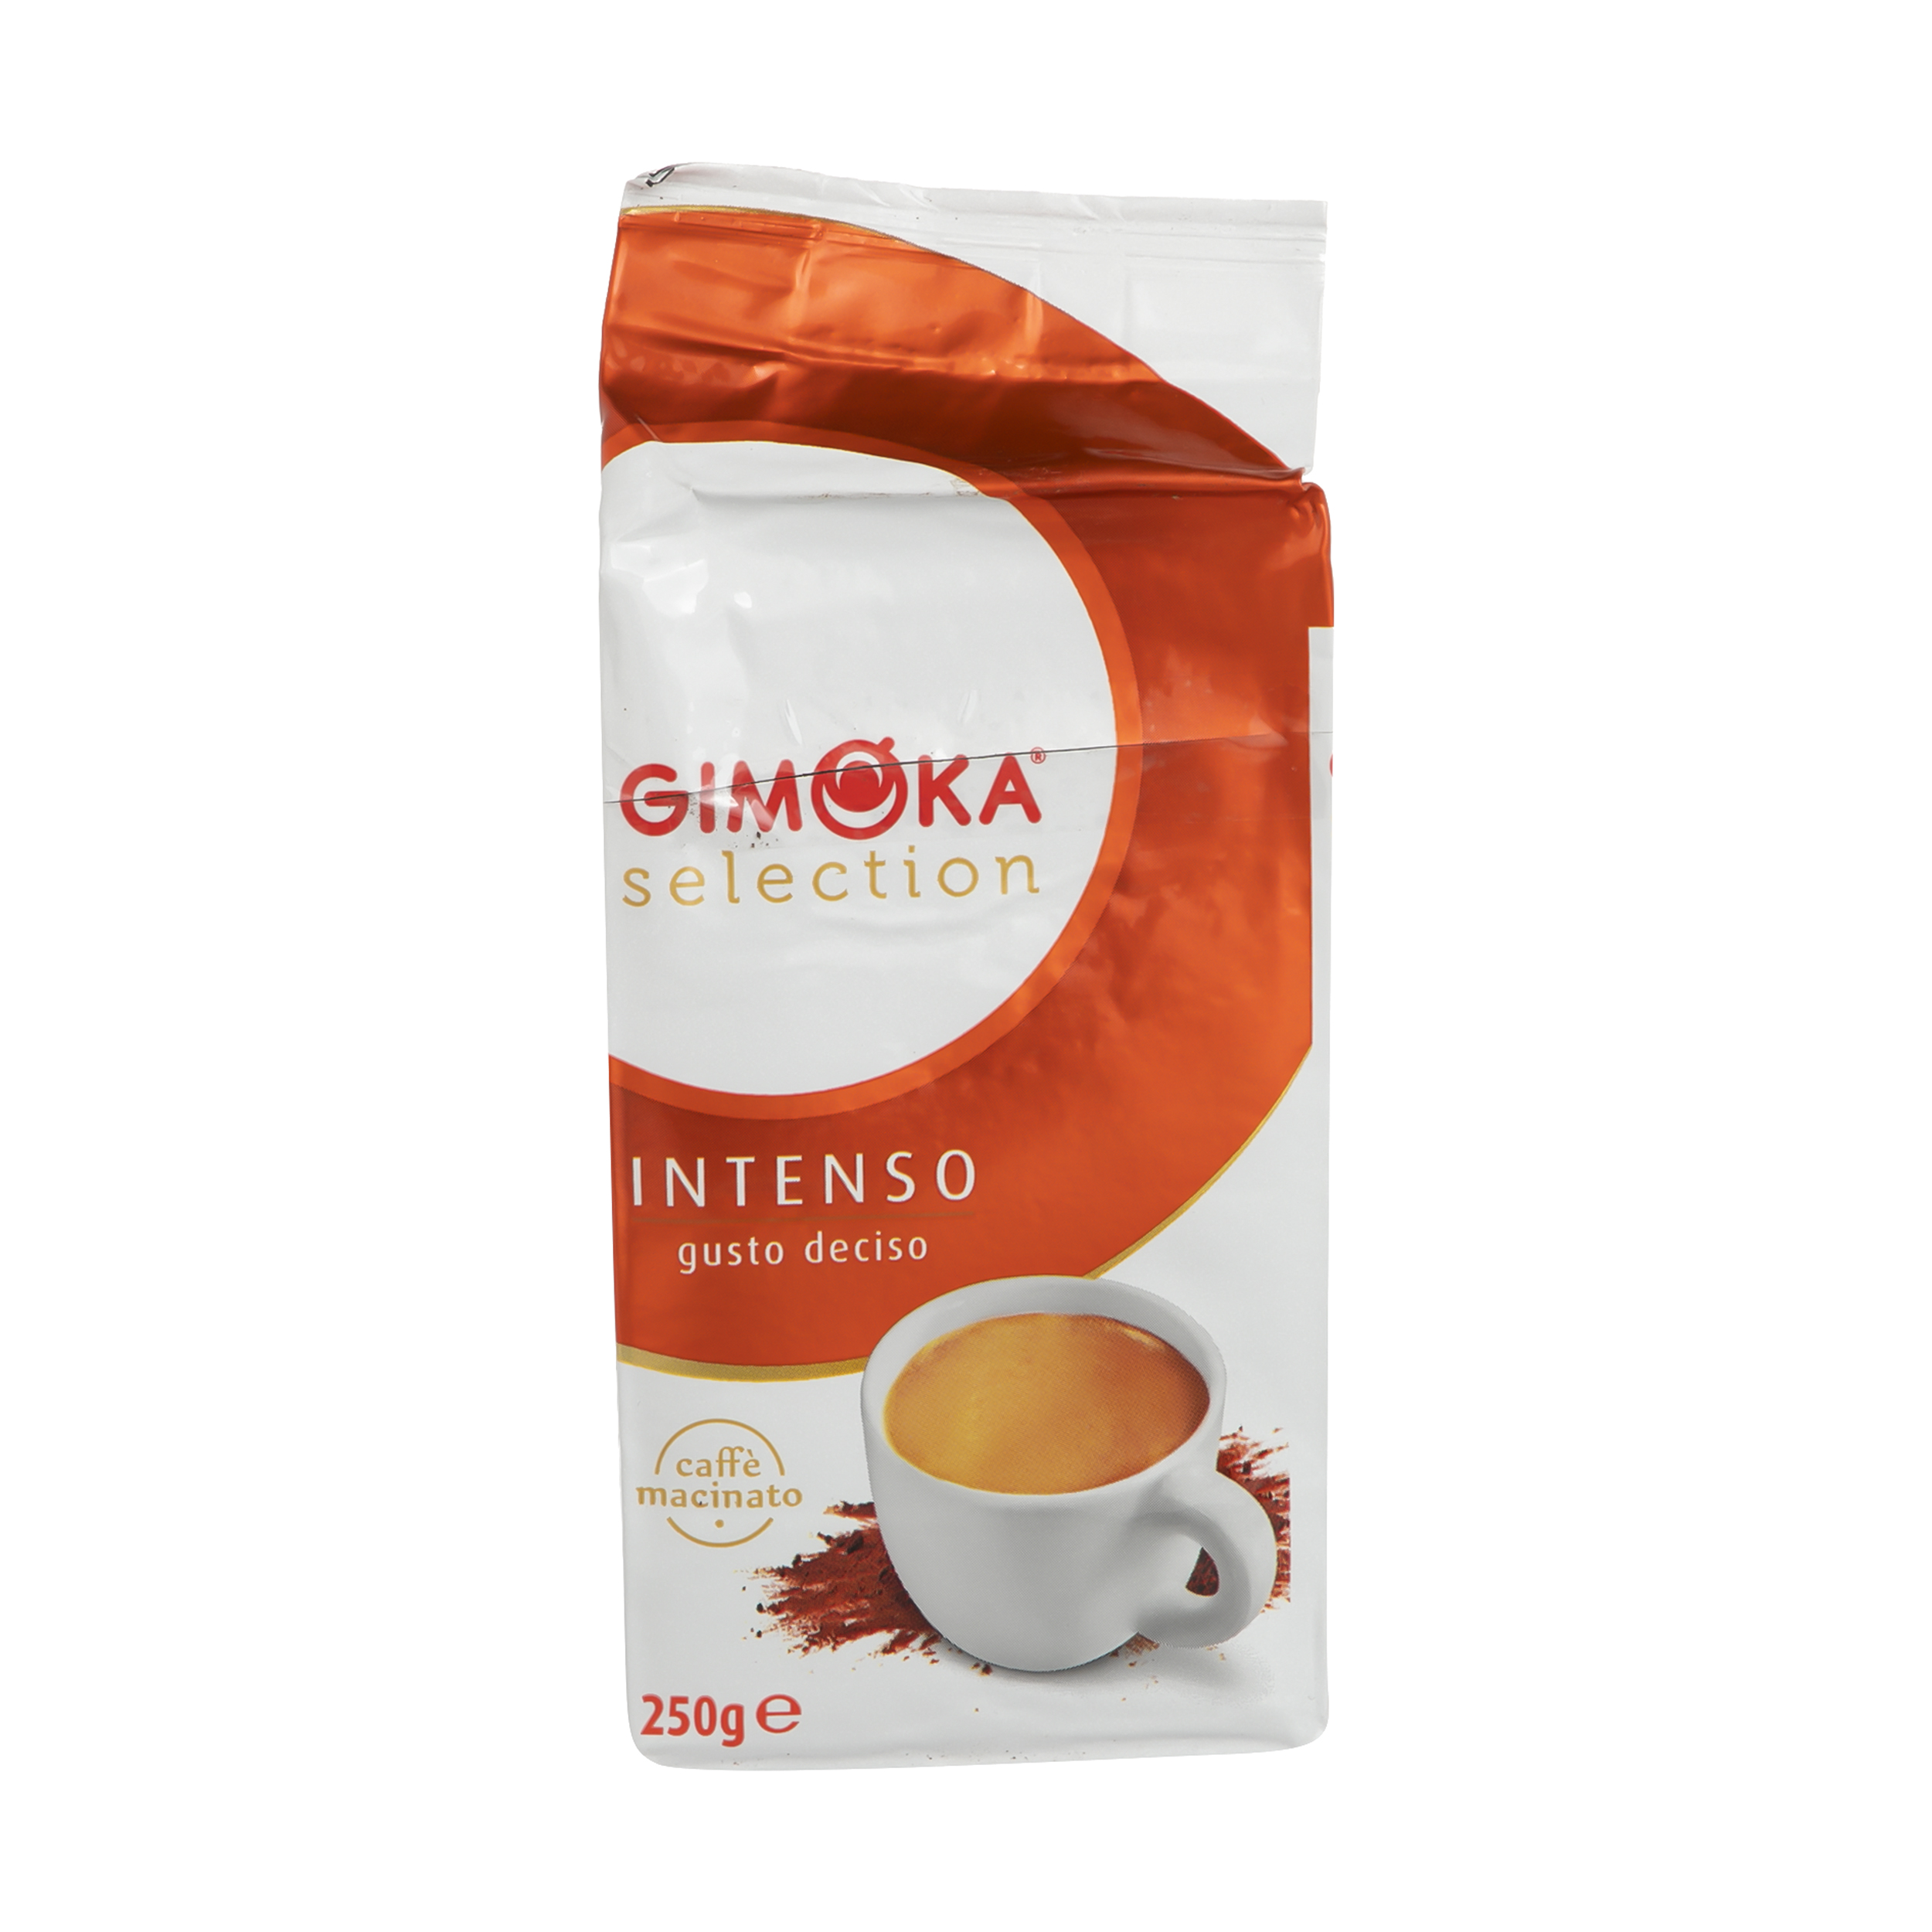 پودر قهوه اینتنسو جیموکا - 250 گرم 